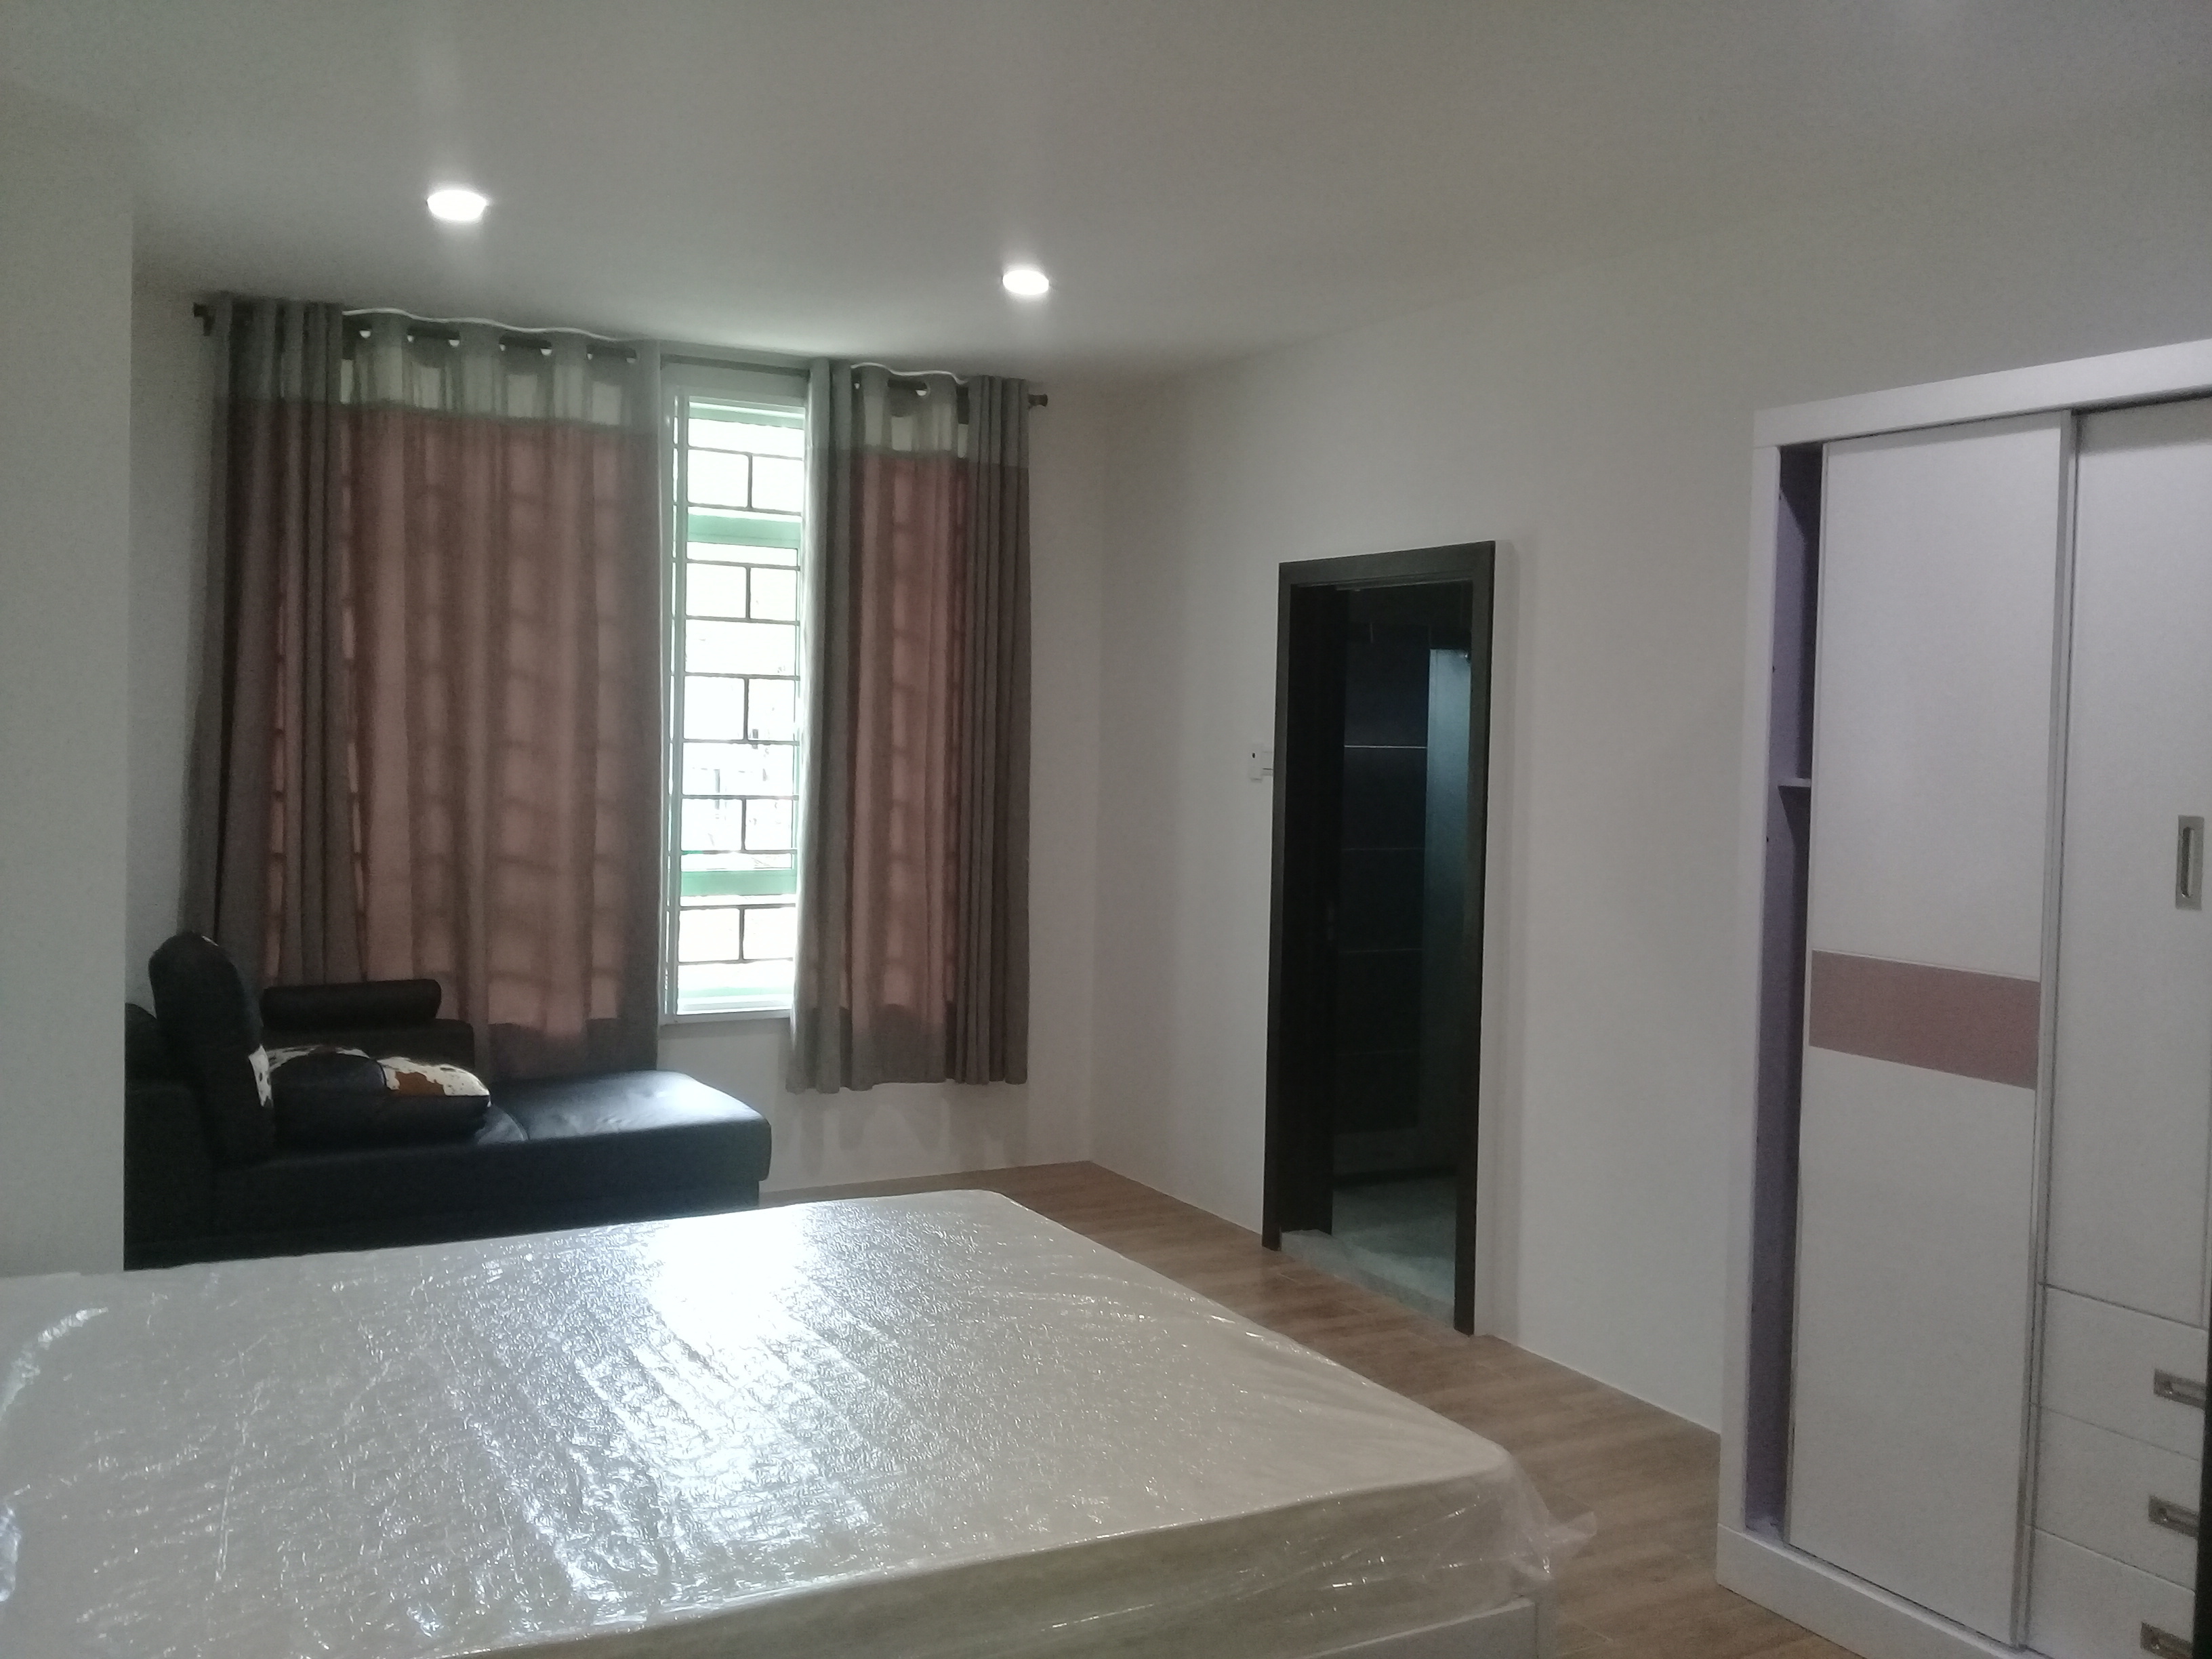 Apartment for rent in Waigani ID 13199 | Hausples.com.pg